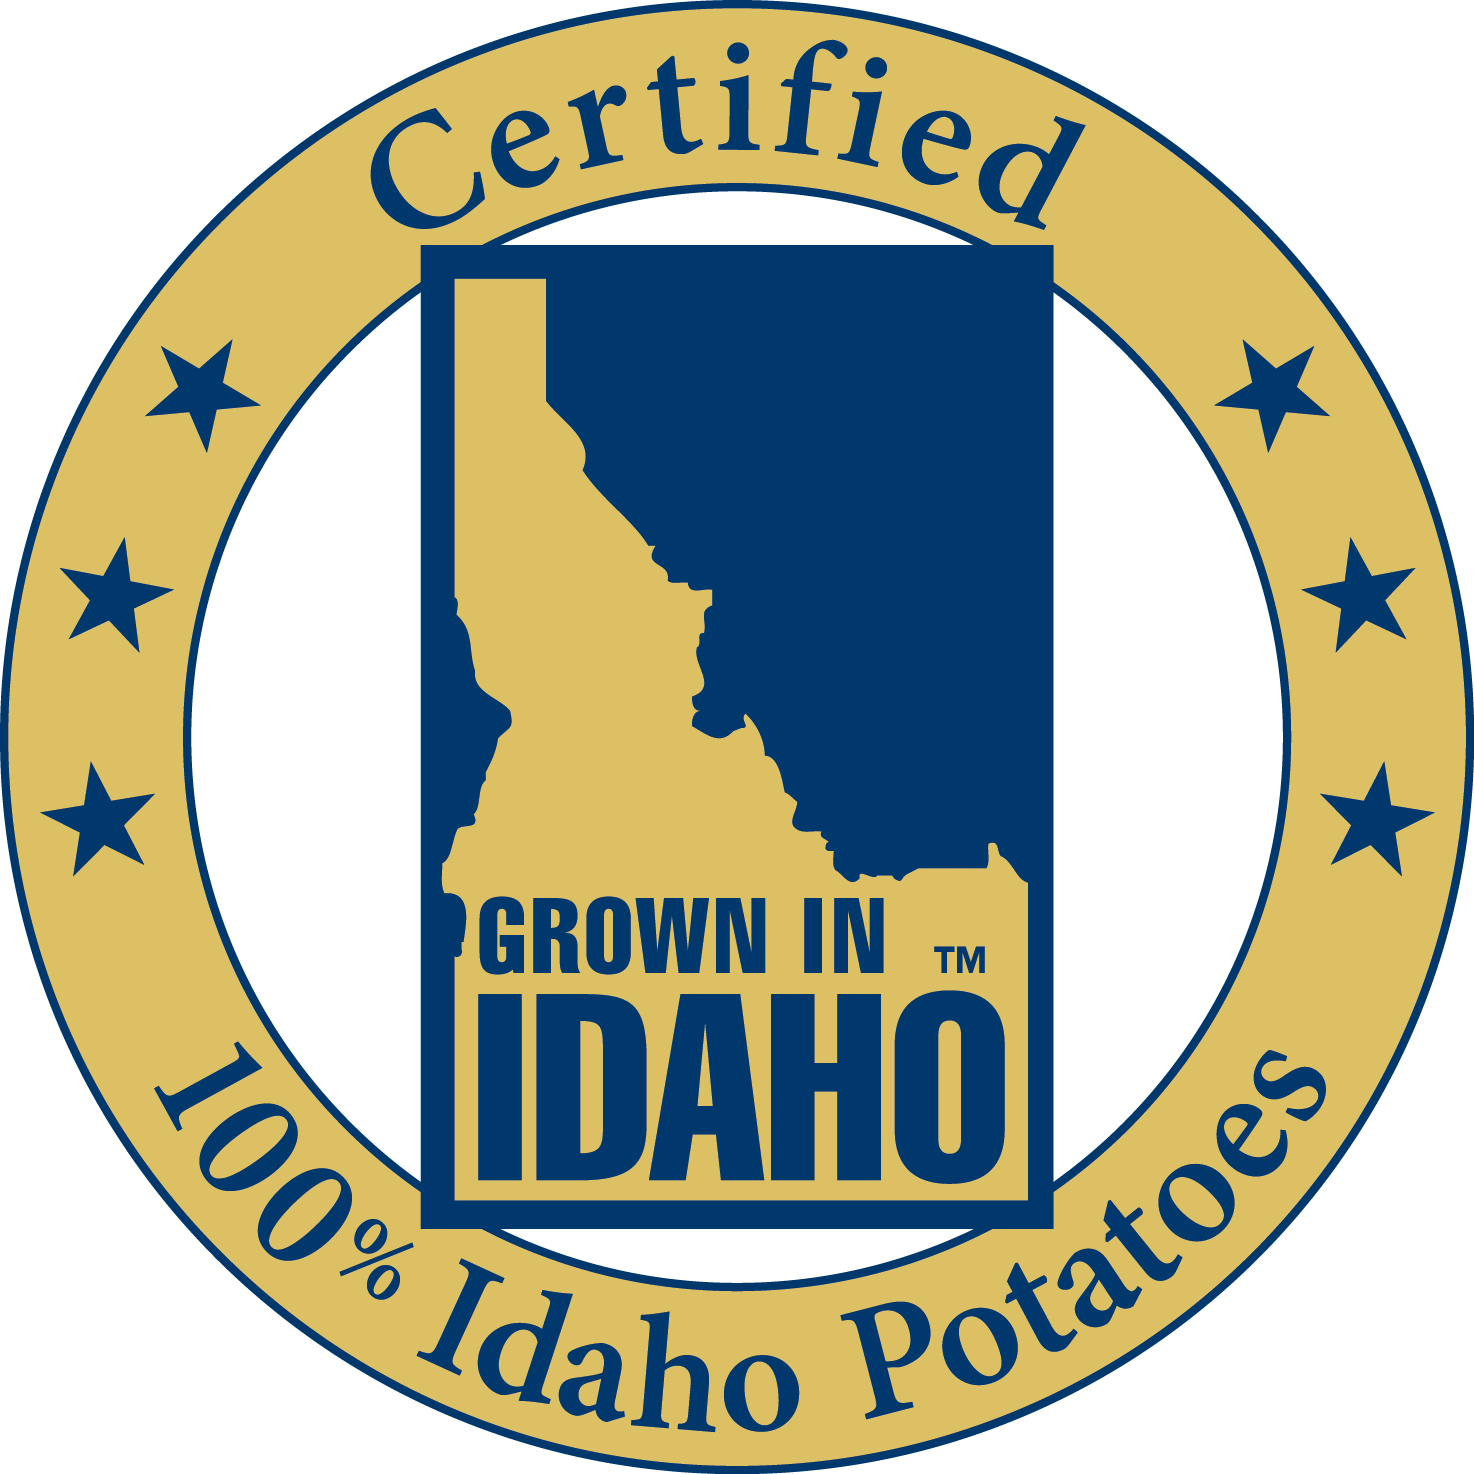 Idaho Potatoes logo